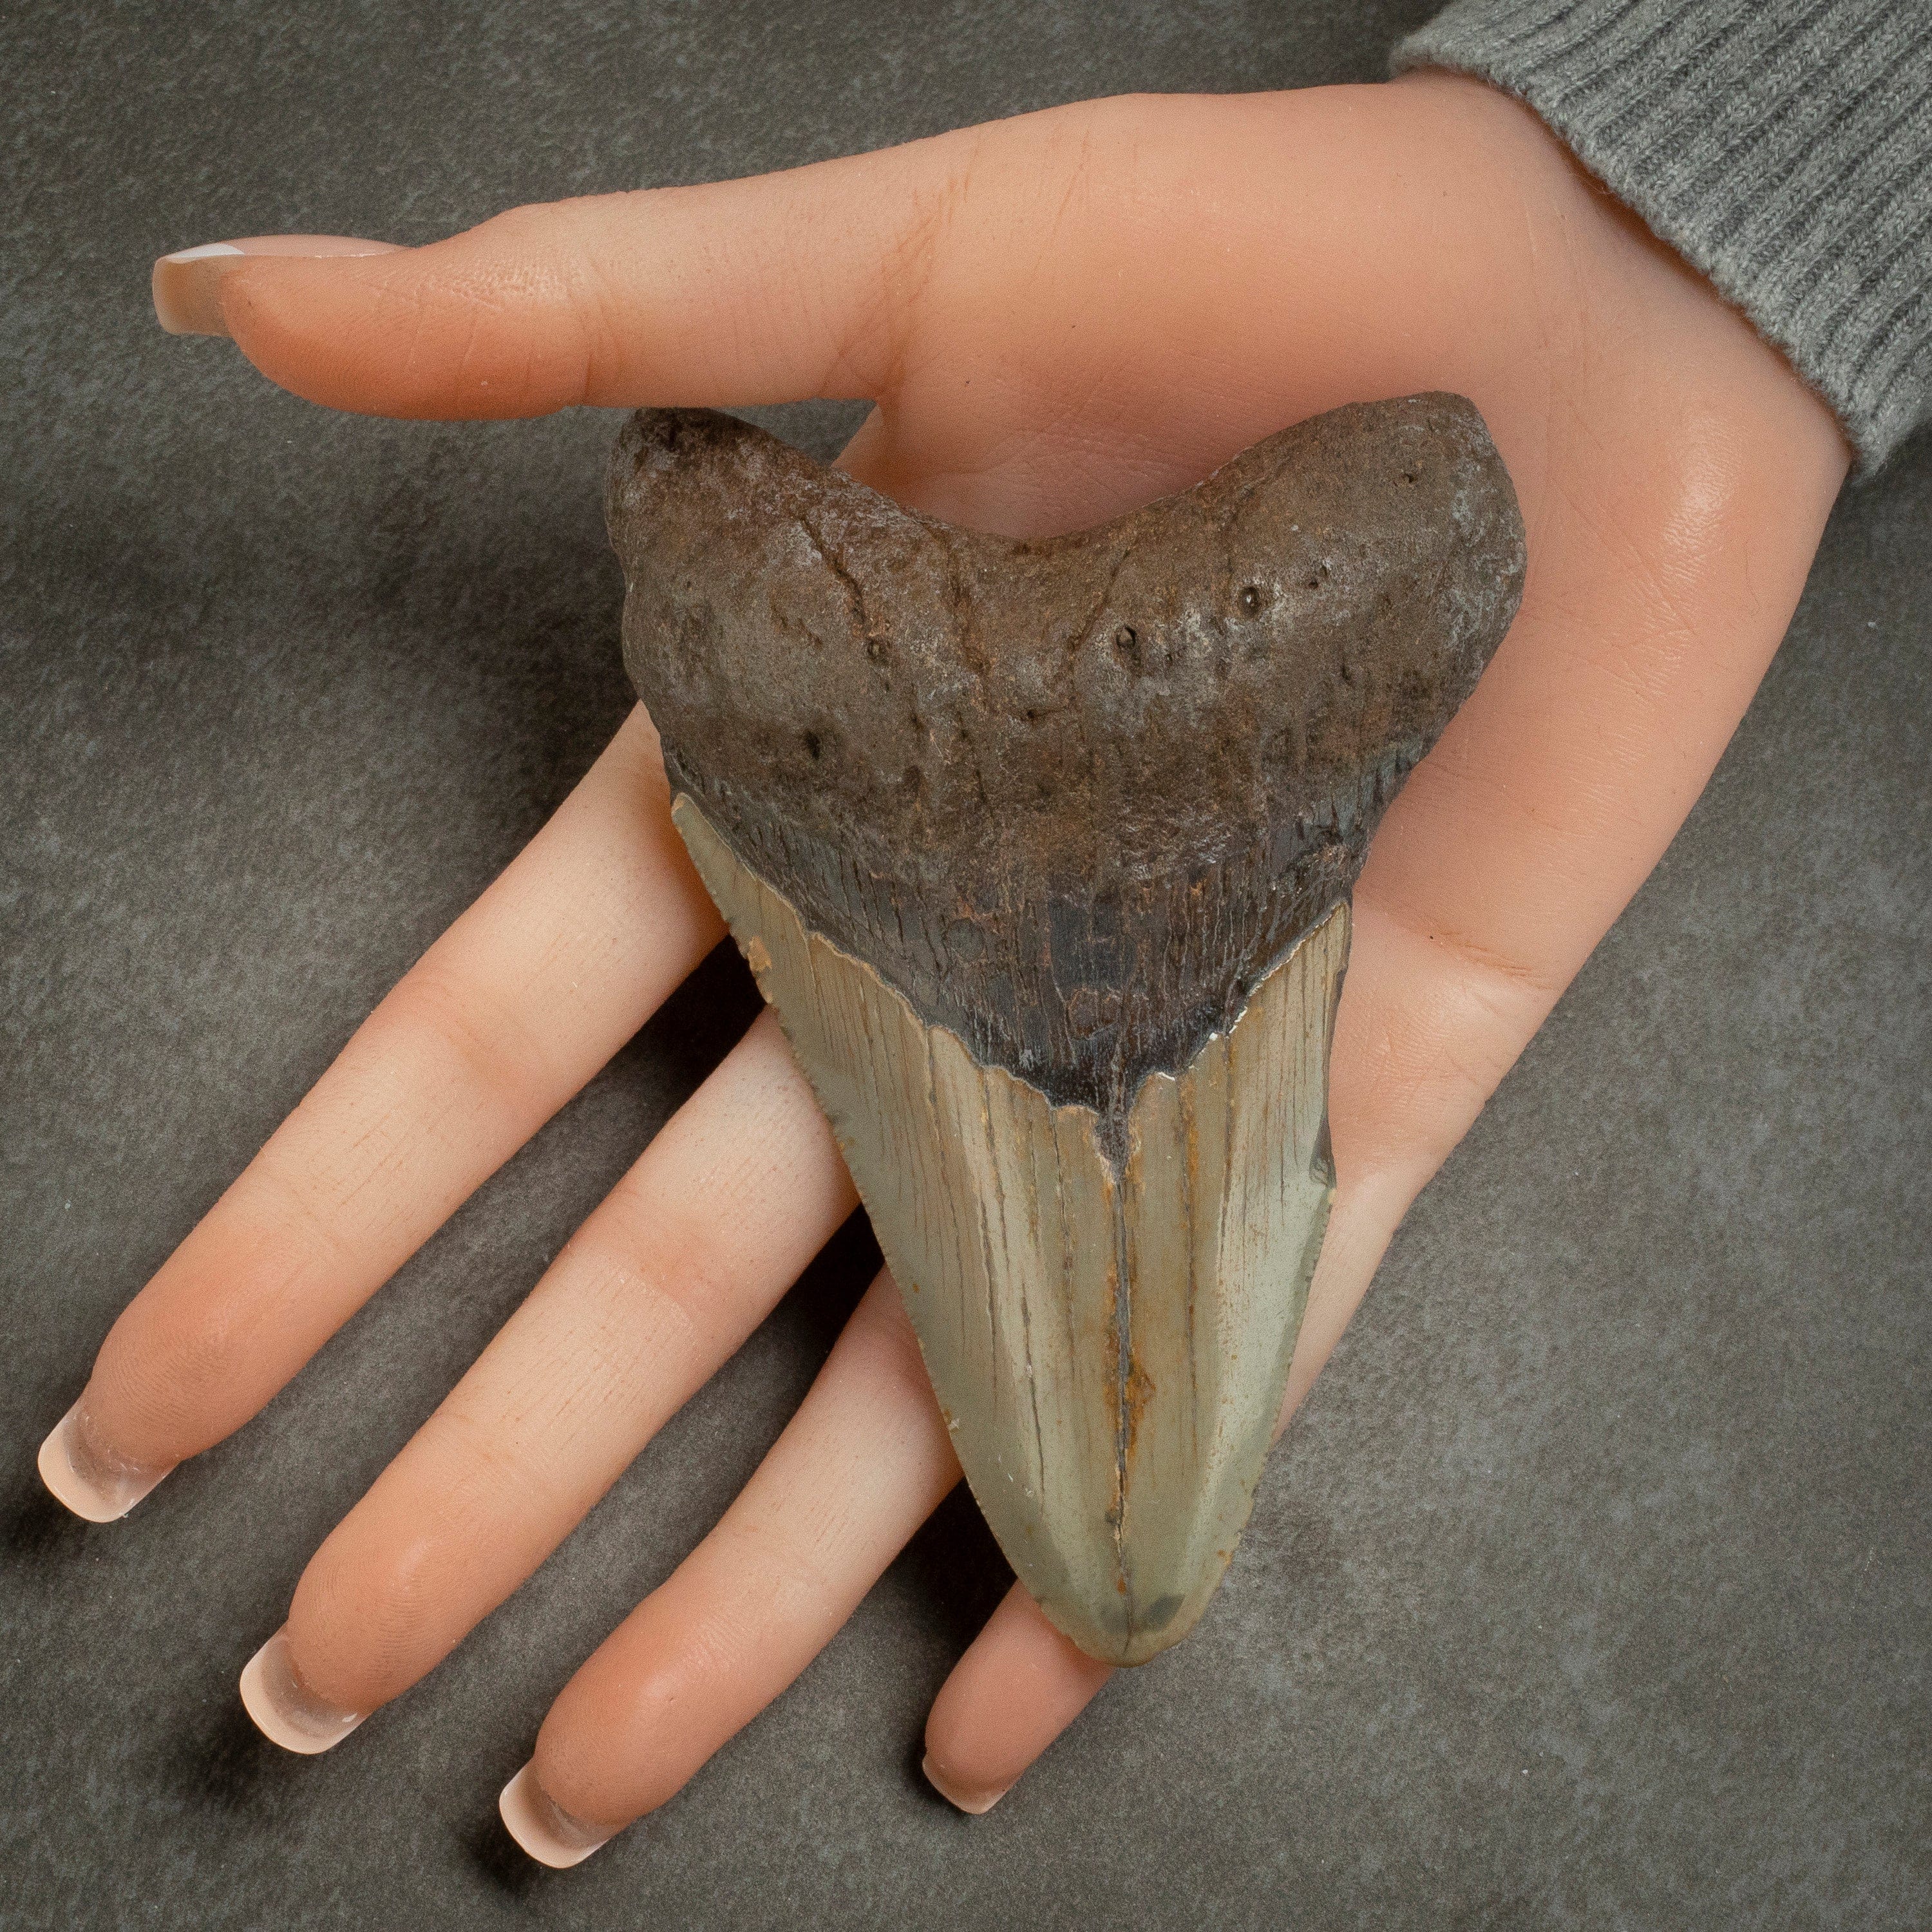 Kalifano Megalodon Teeth Megalodon Tooth from South Carolina - 4.3" ST1600.028